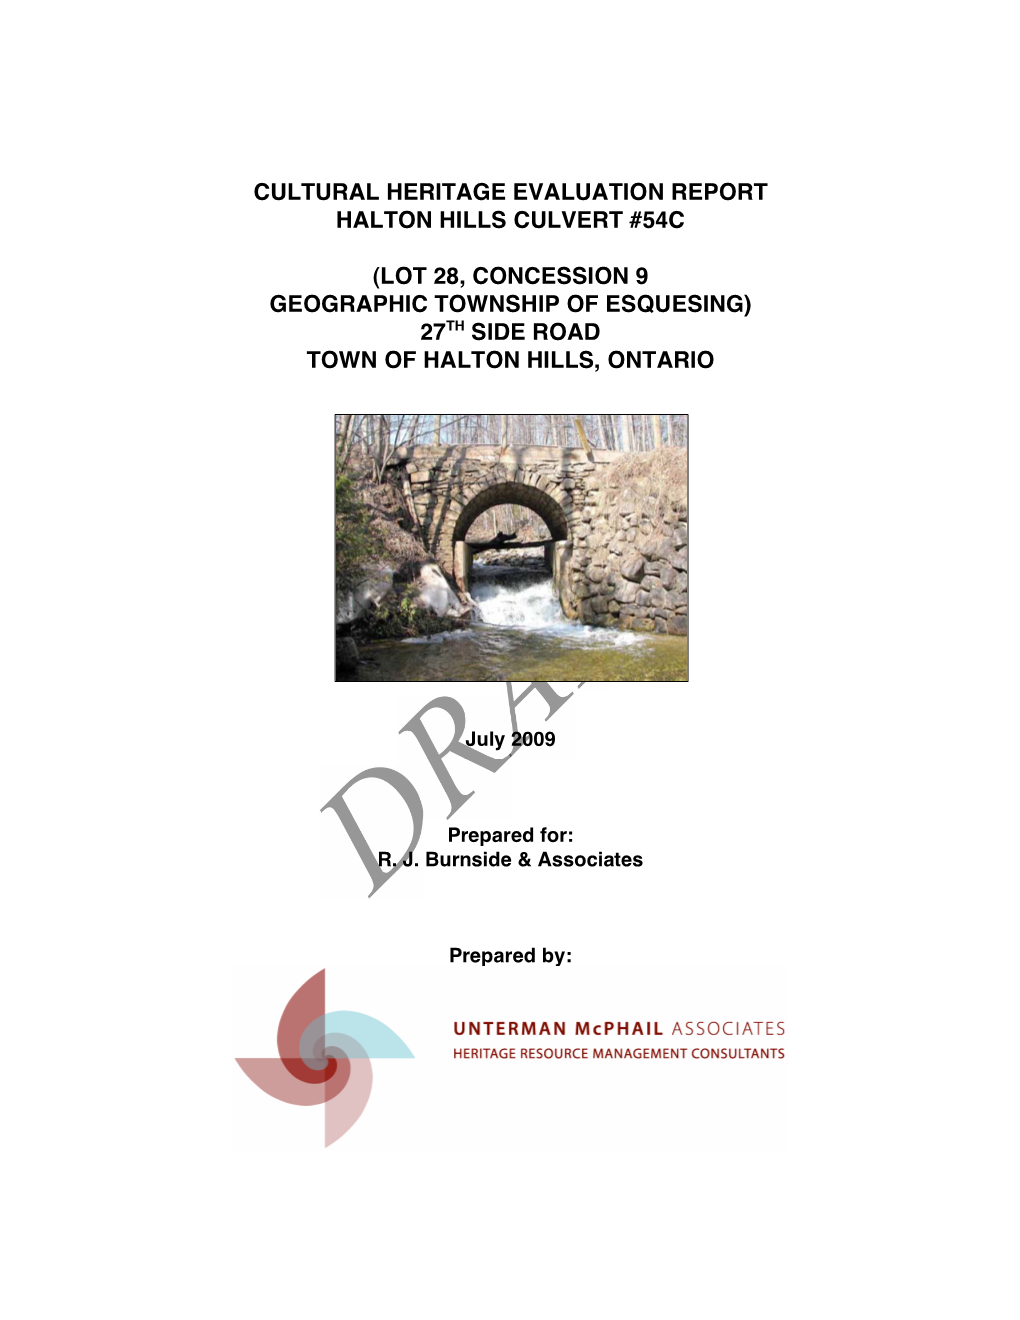 Cultural Heritage Evaluation Report Halton Hills Culvert #54C